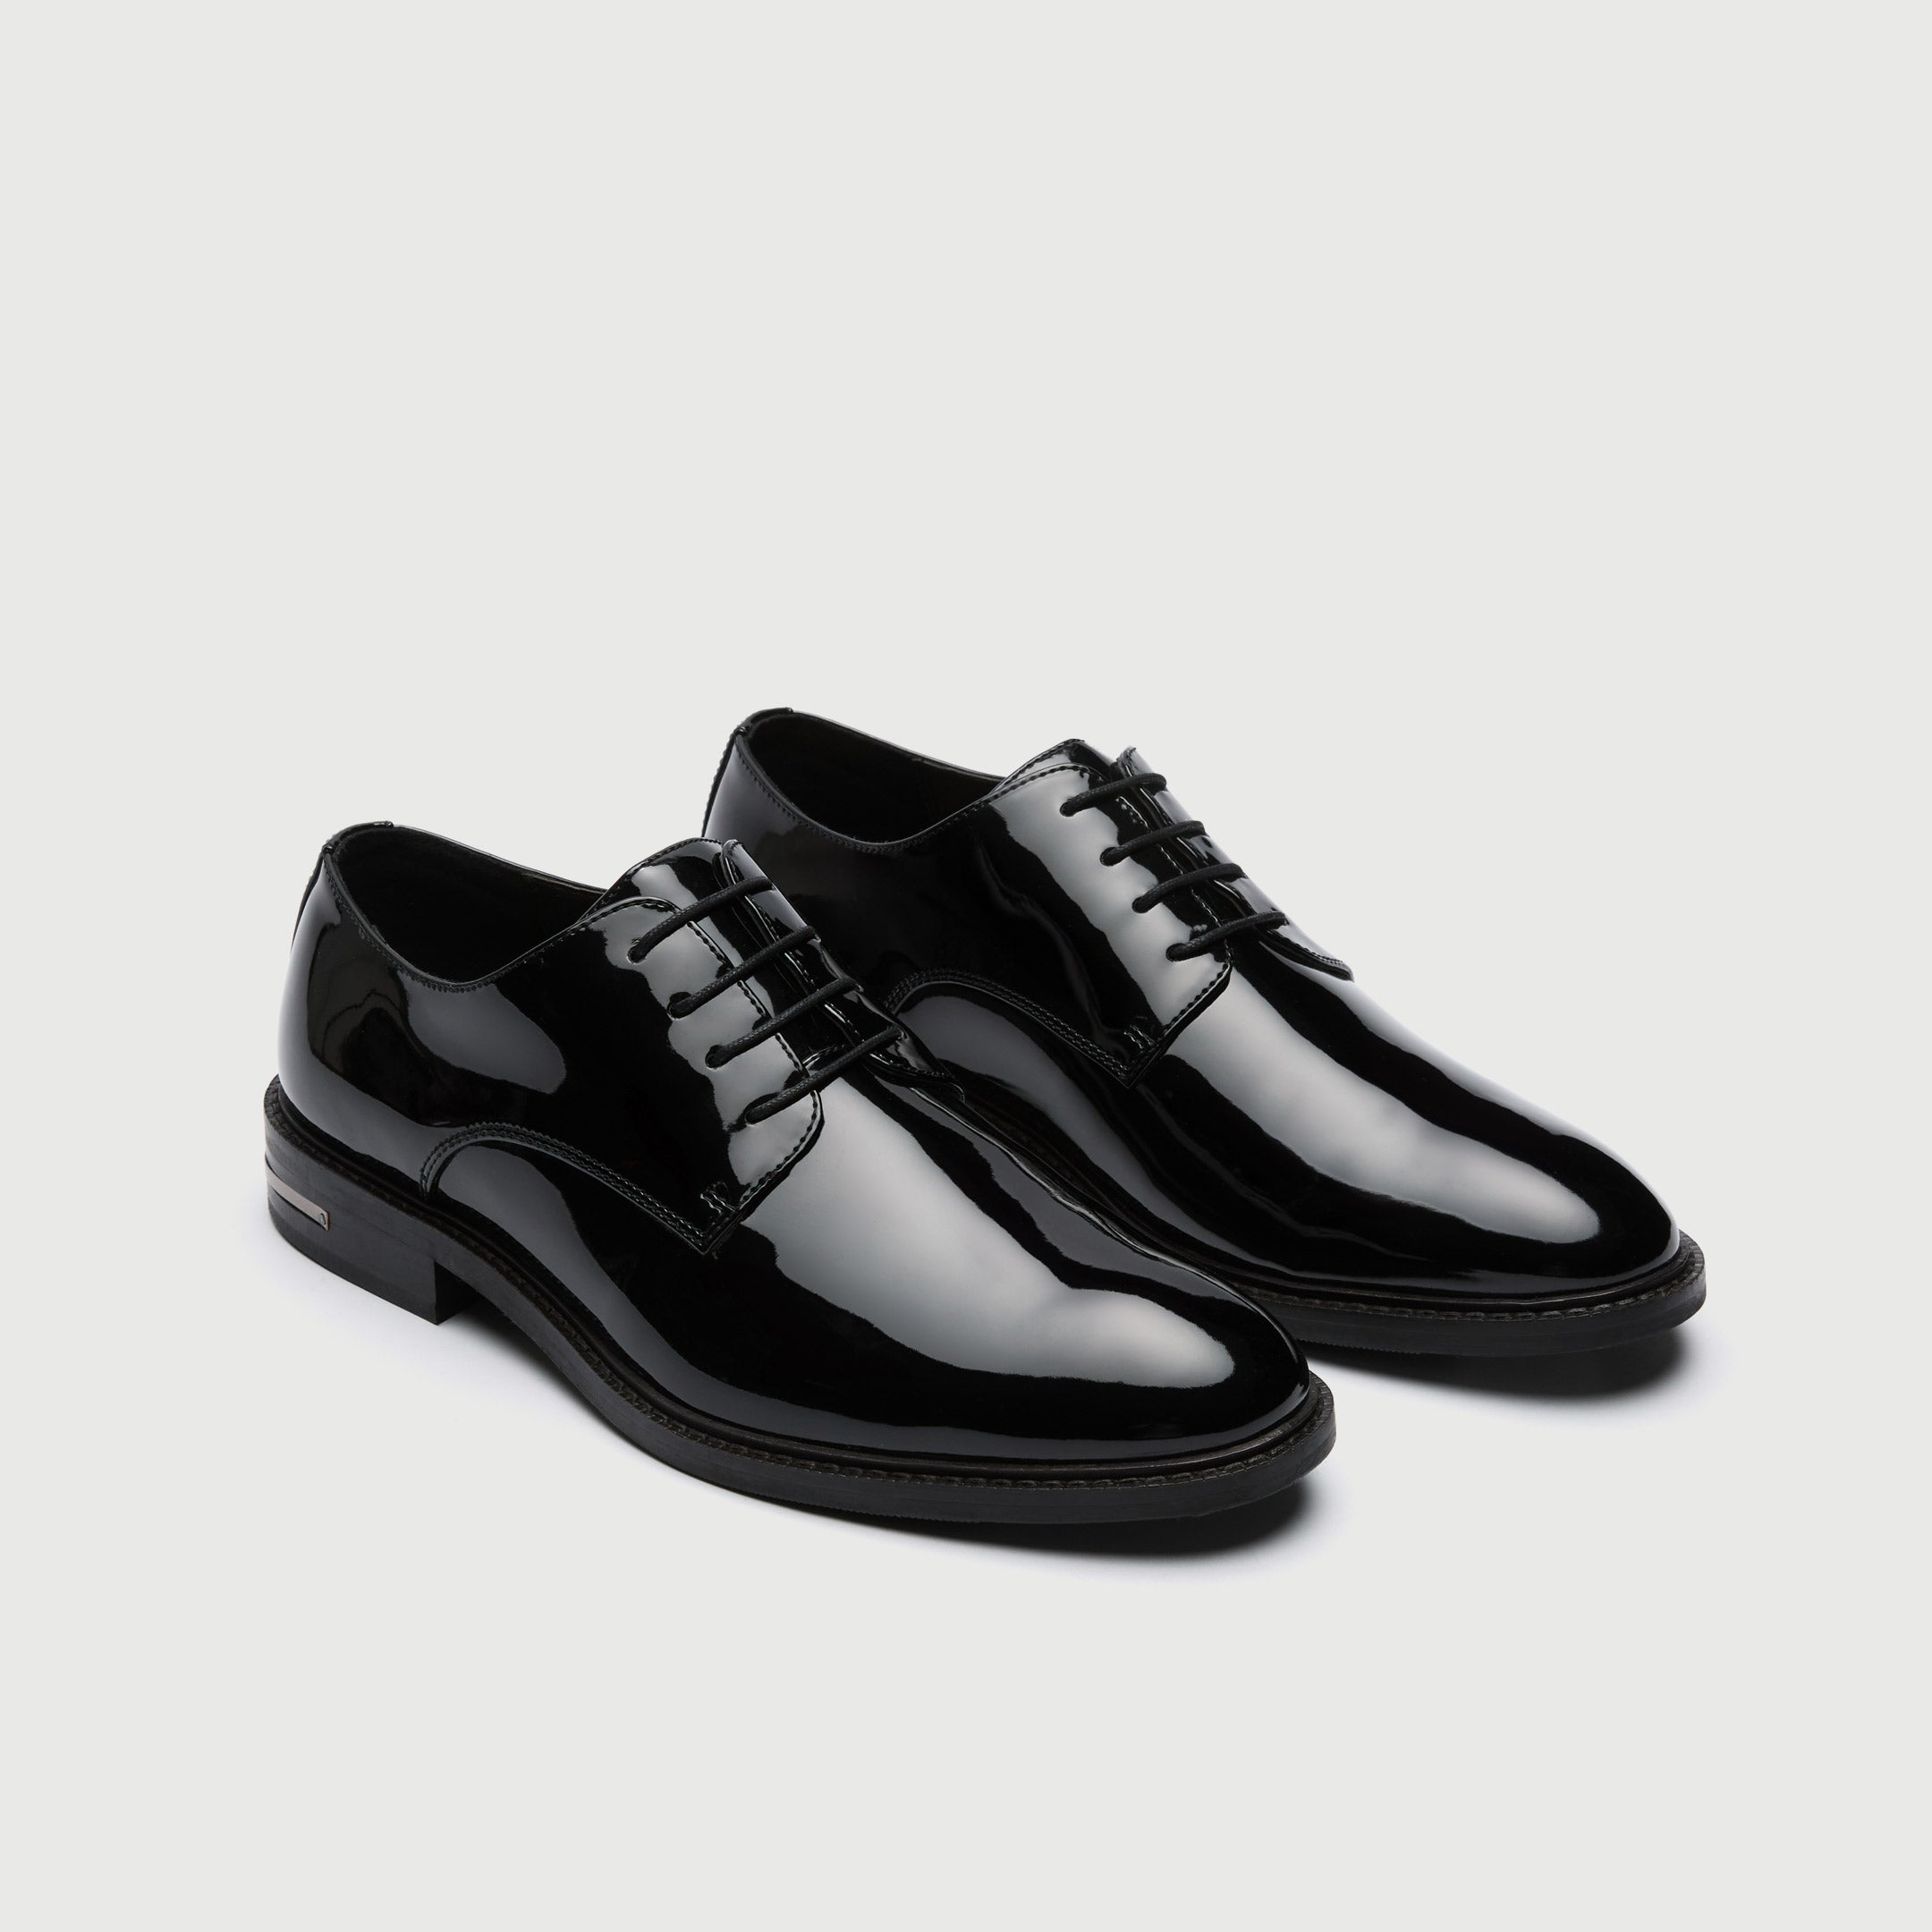 WALK London Men's Oliver Derby Shoe in Black Patent Leather